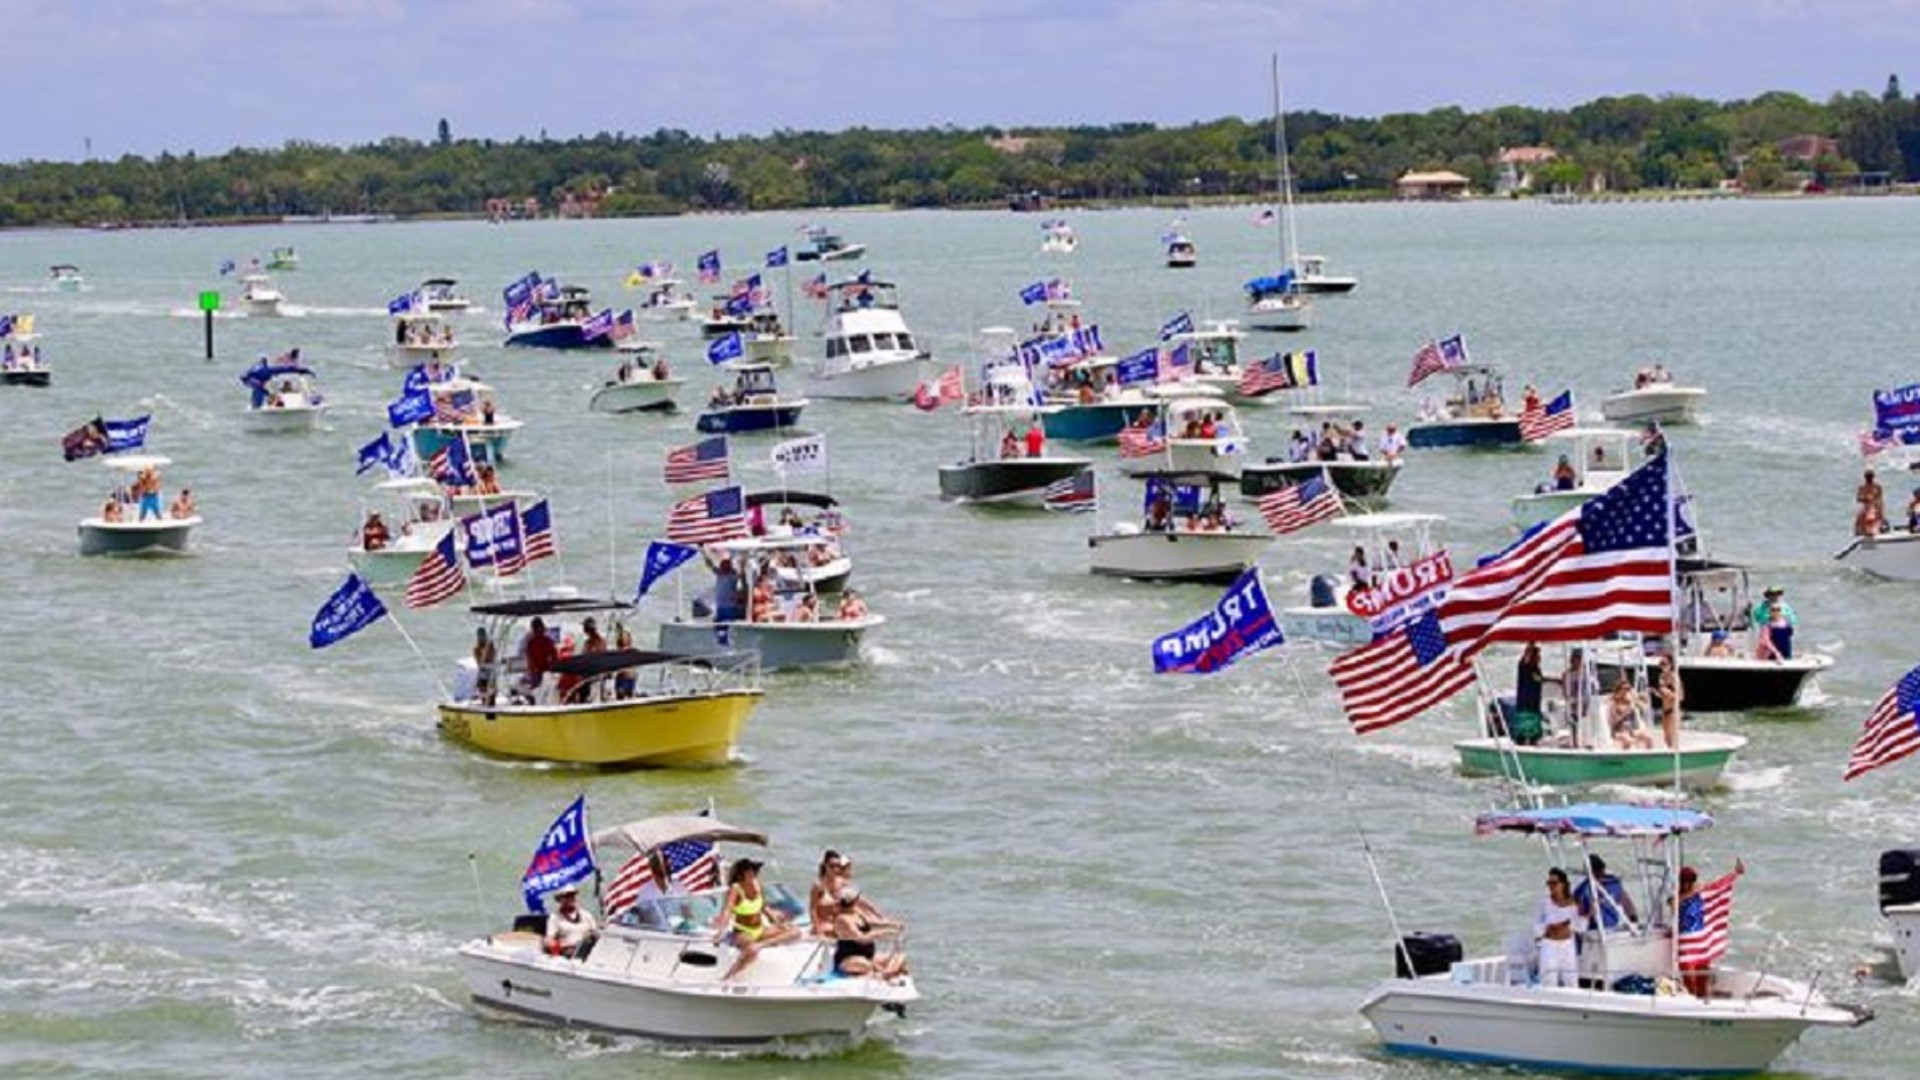 Trump boat parade sets sail in Pinellas County